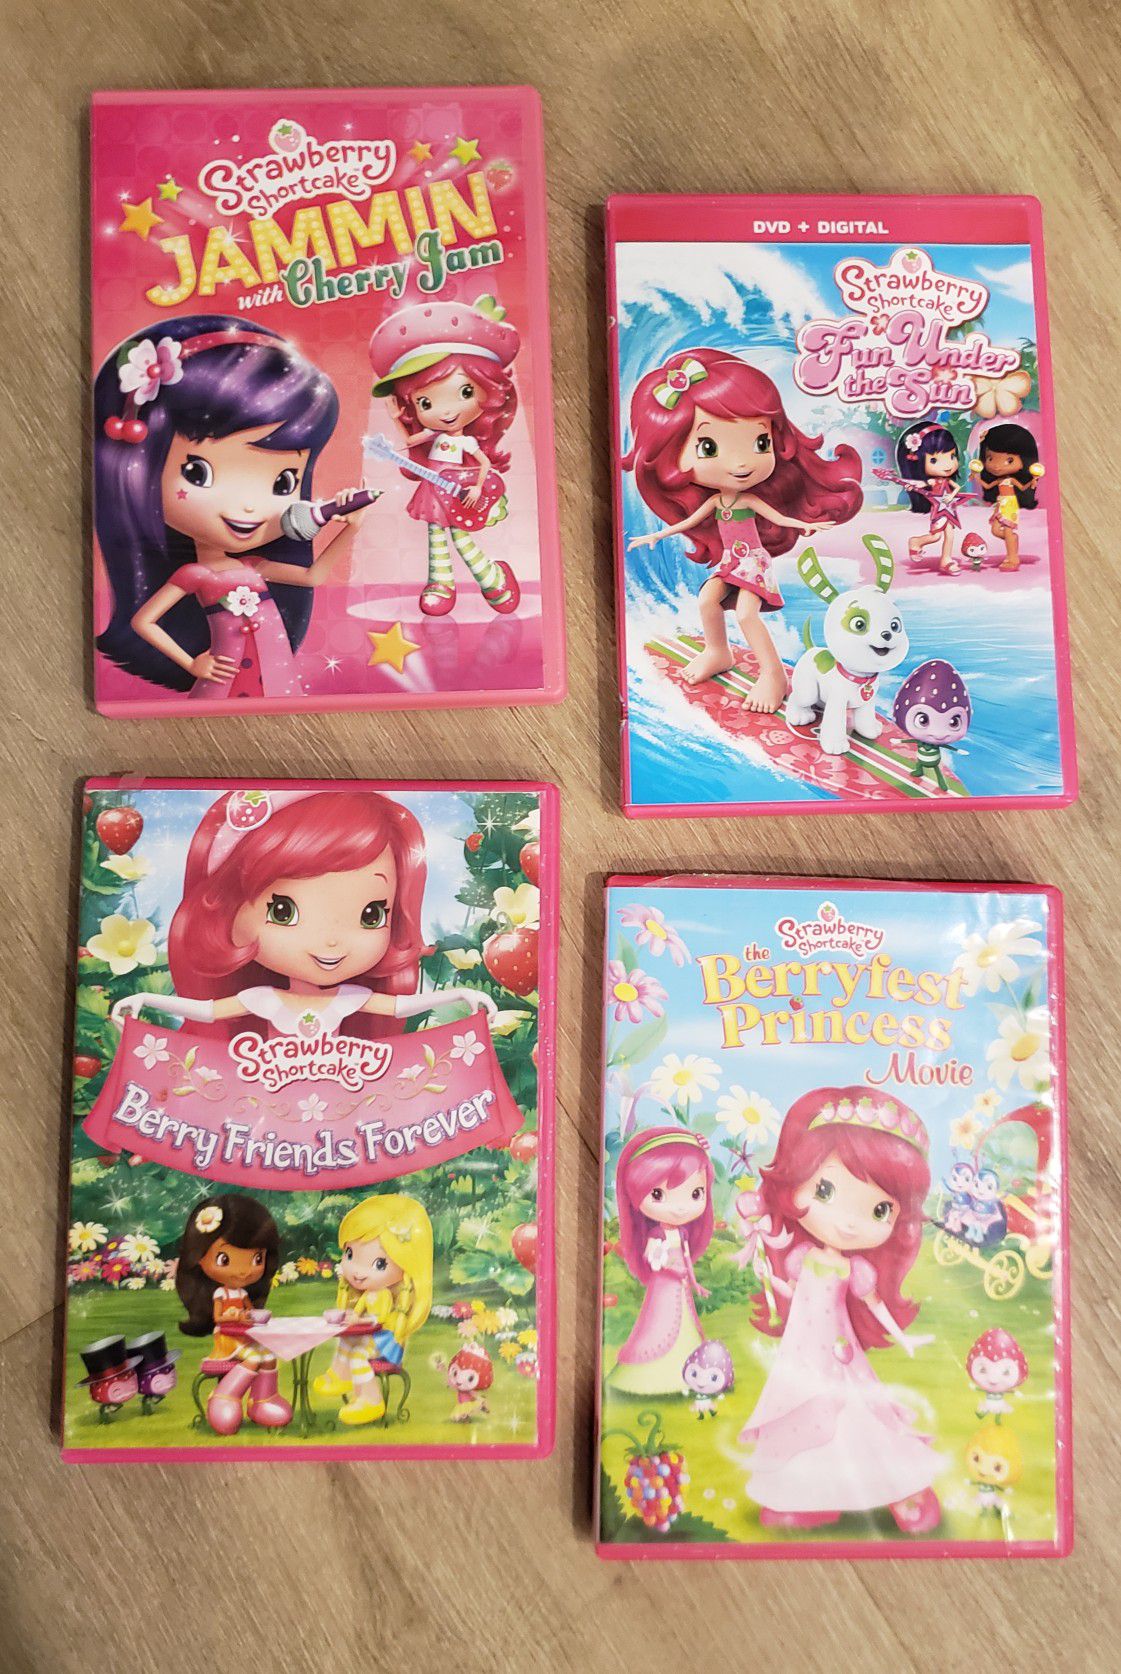 4 Strawberry Shortcake DVD's